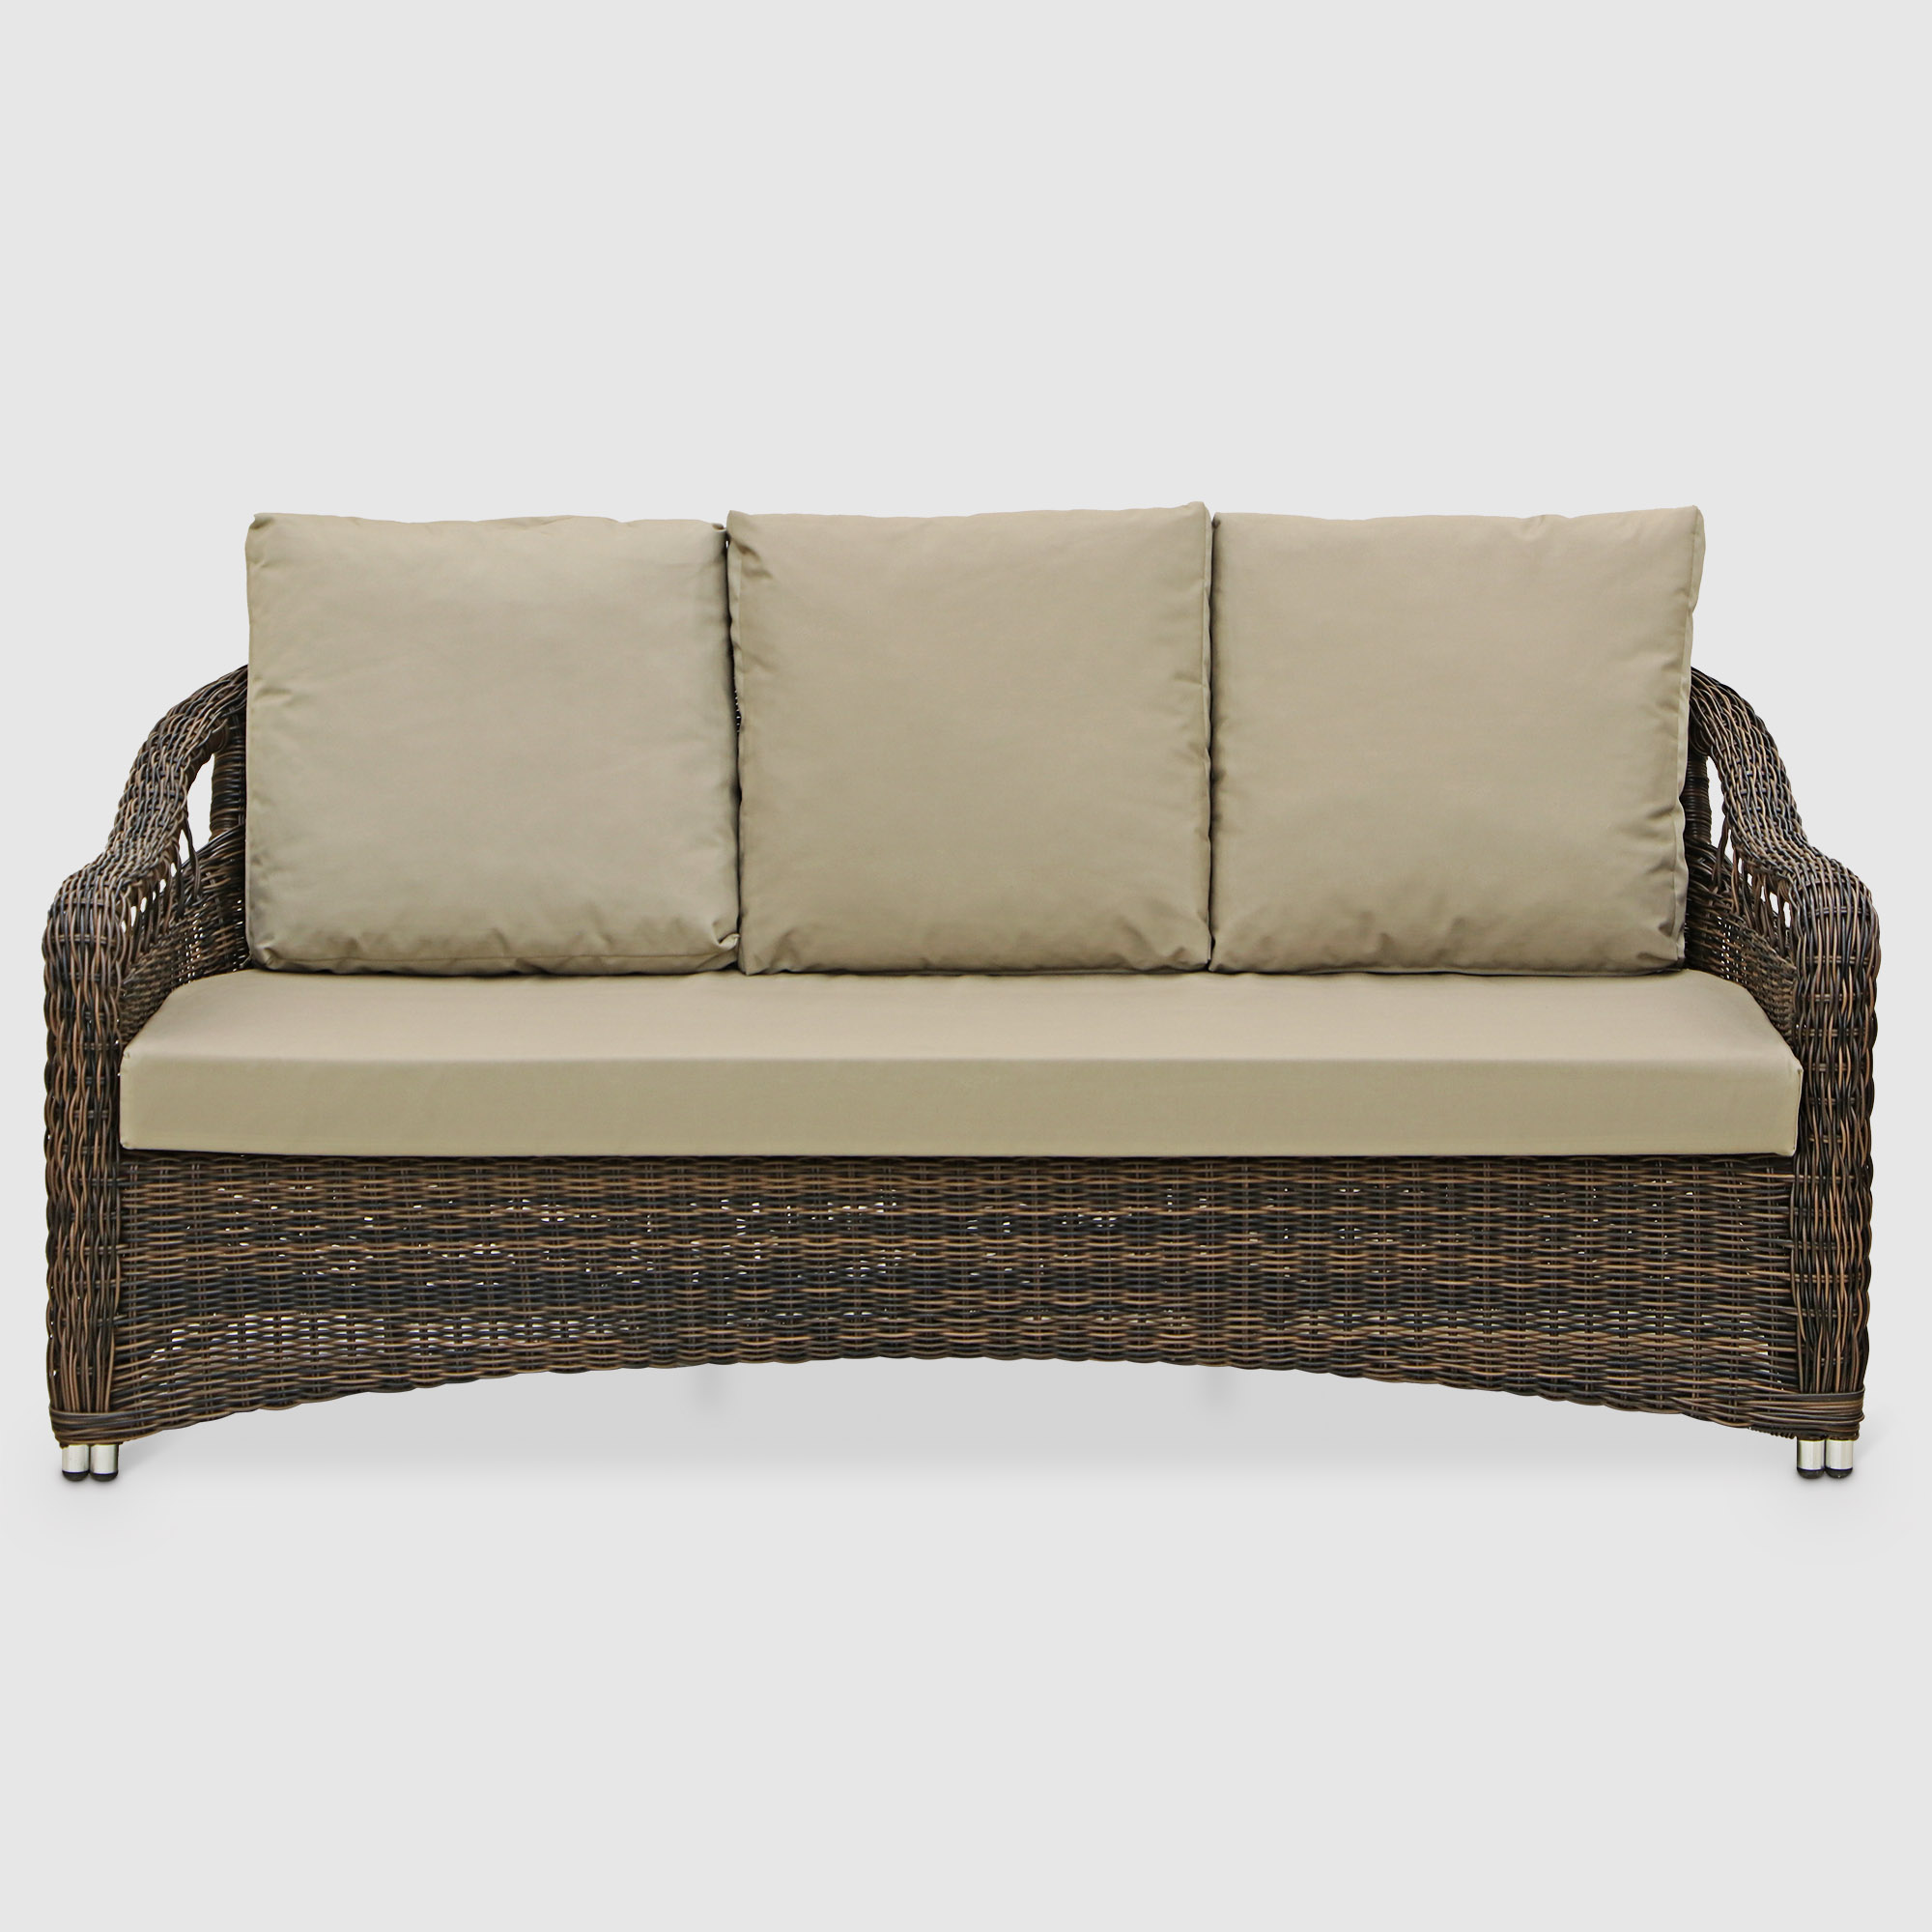 Комплект мебели NS Rattan Sky коричневый с бежевым 4 предмета, цвет бежевый, размер 180х78х78 - фото 2